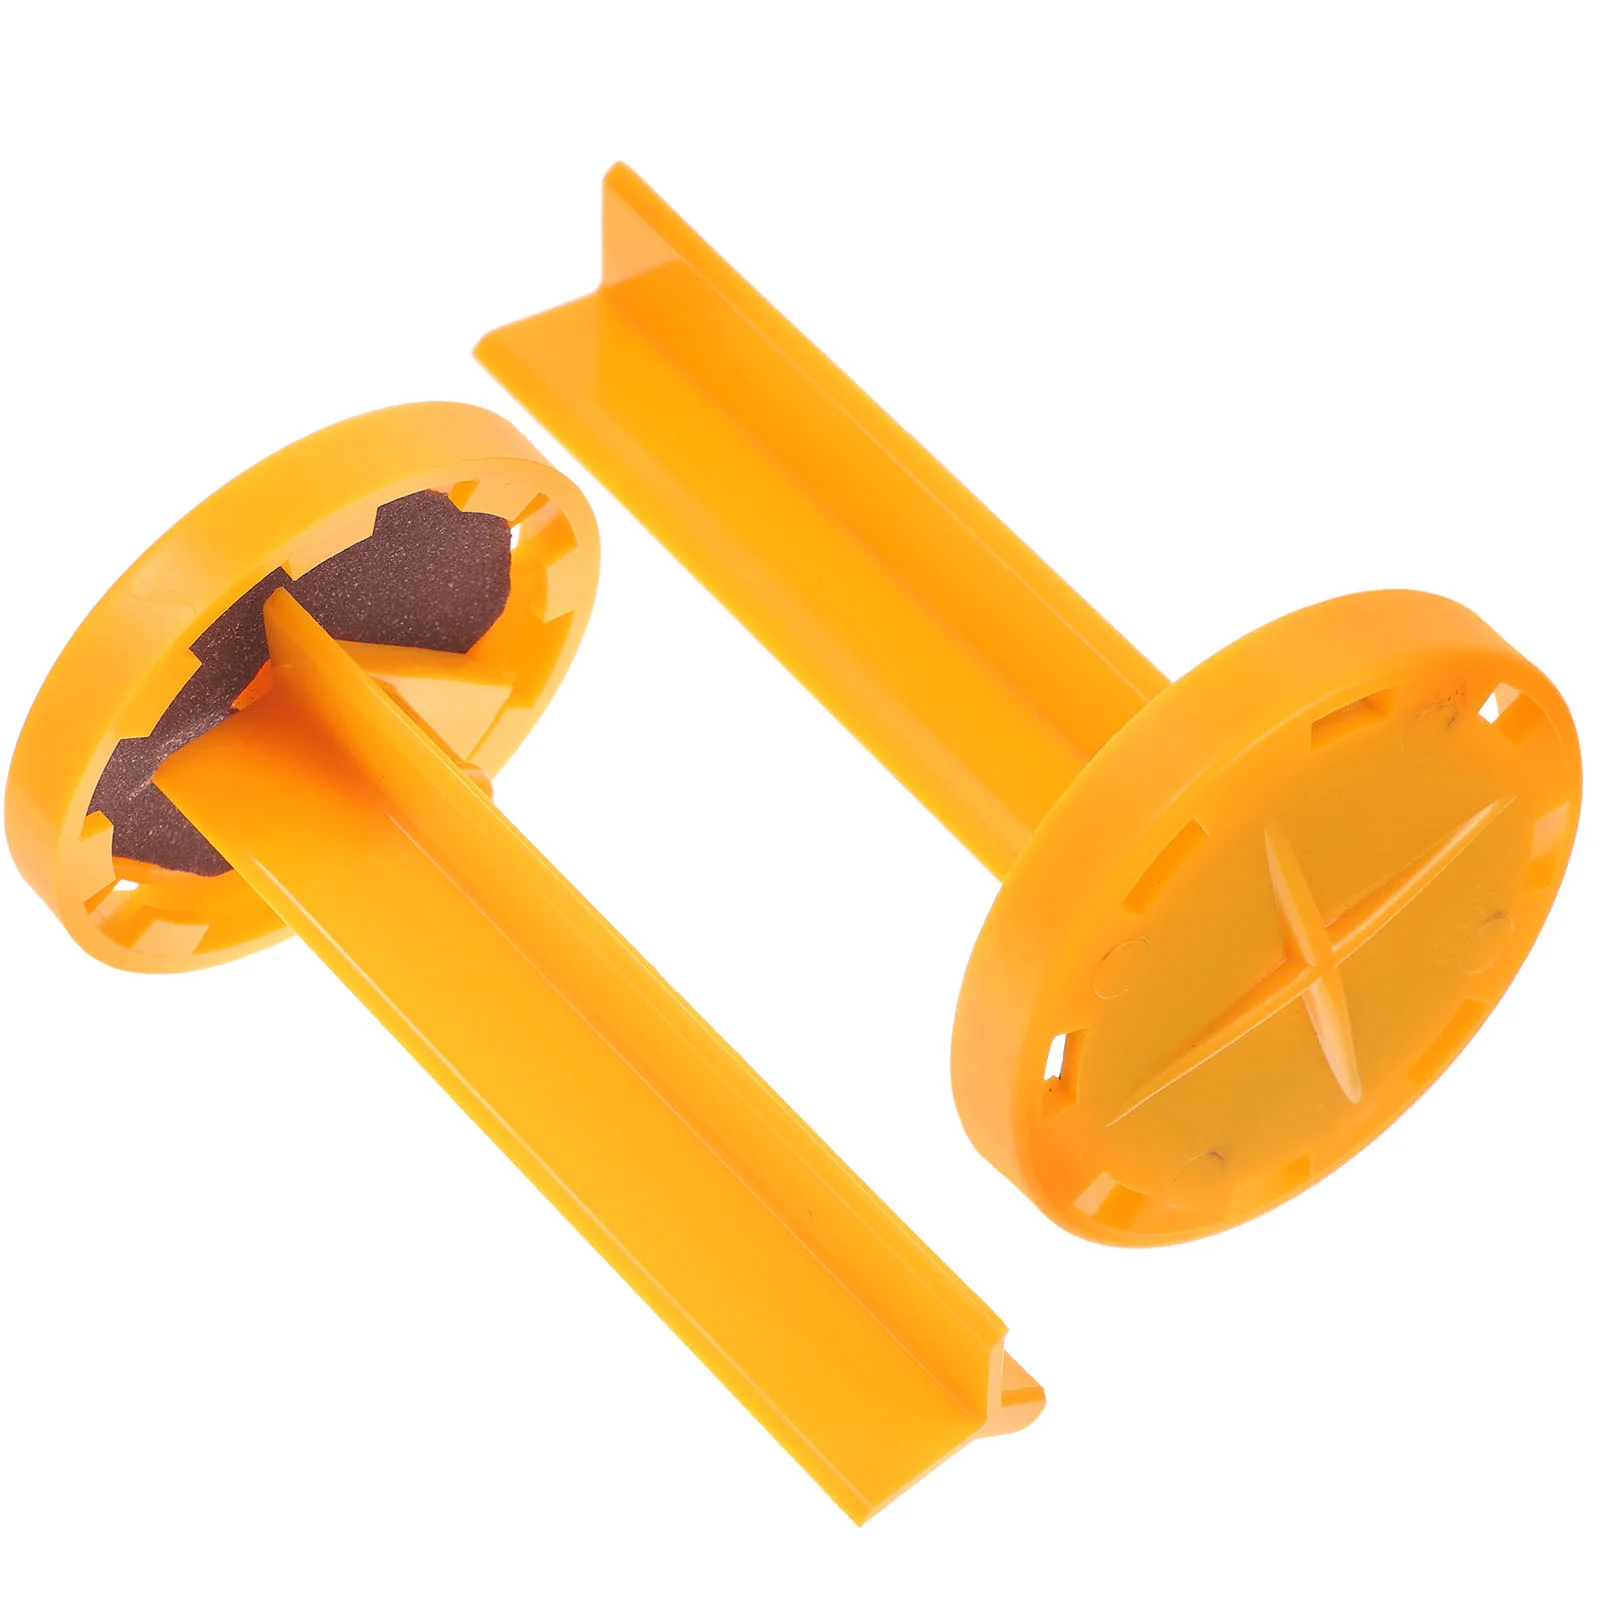 

2 Pcs Billiard Cue Pool Repair Tool Shaper Stick Tip Sander Hotfix Plastic Scuffer Restorer Repairing Trimmer